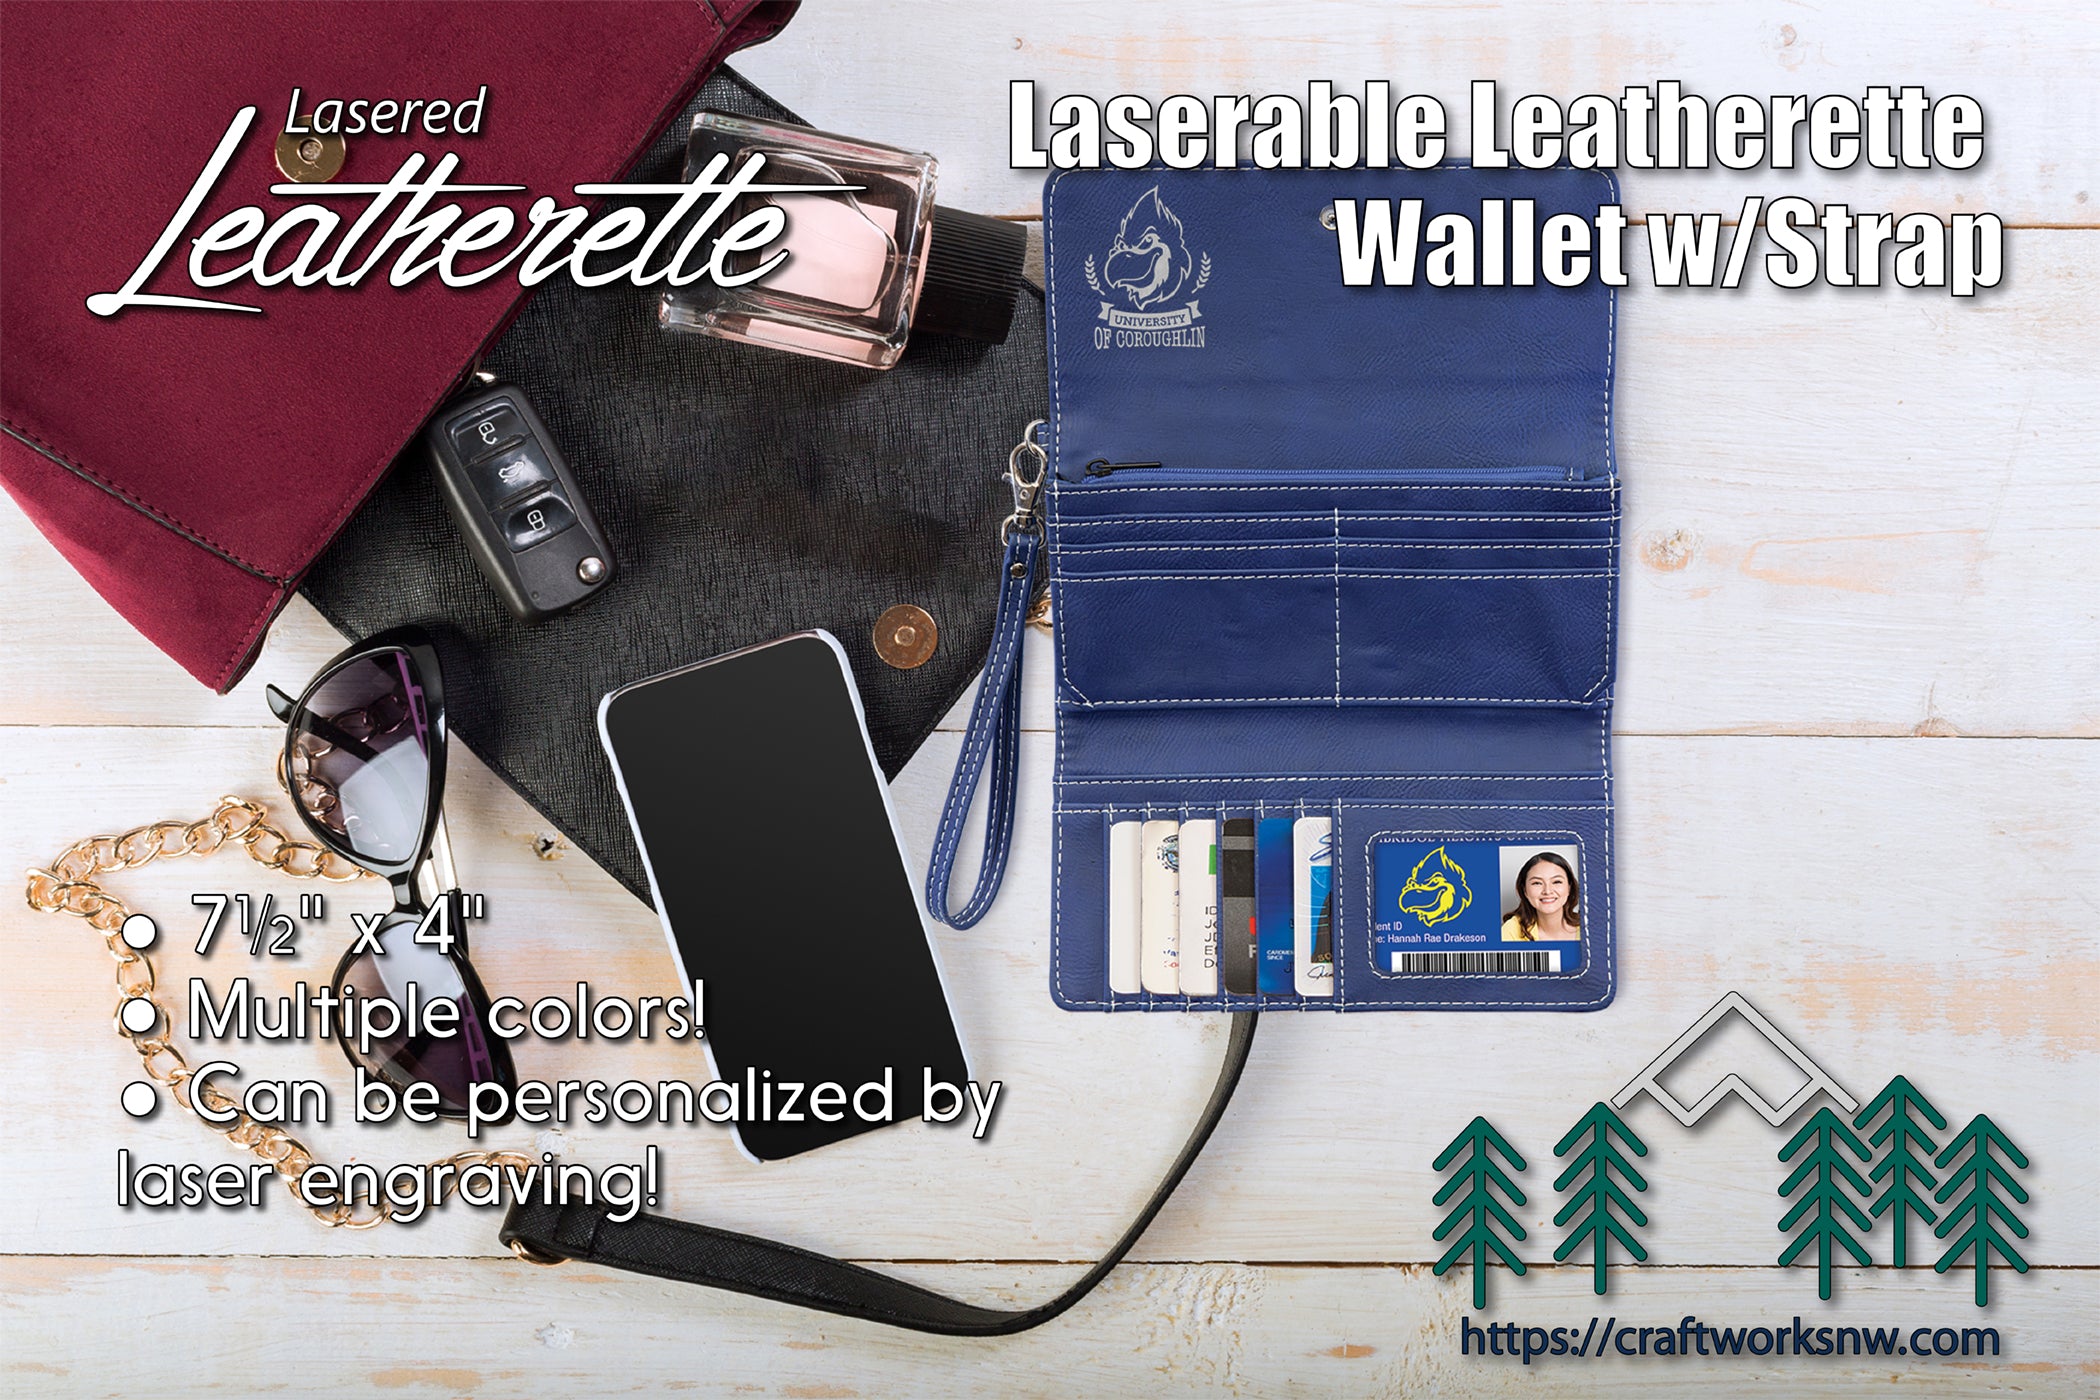 Wallet w/Strap, Laserable Leatherette, Laser Engraved - Craftworks NW, LLC